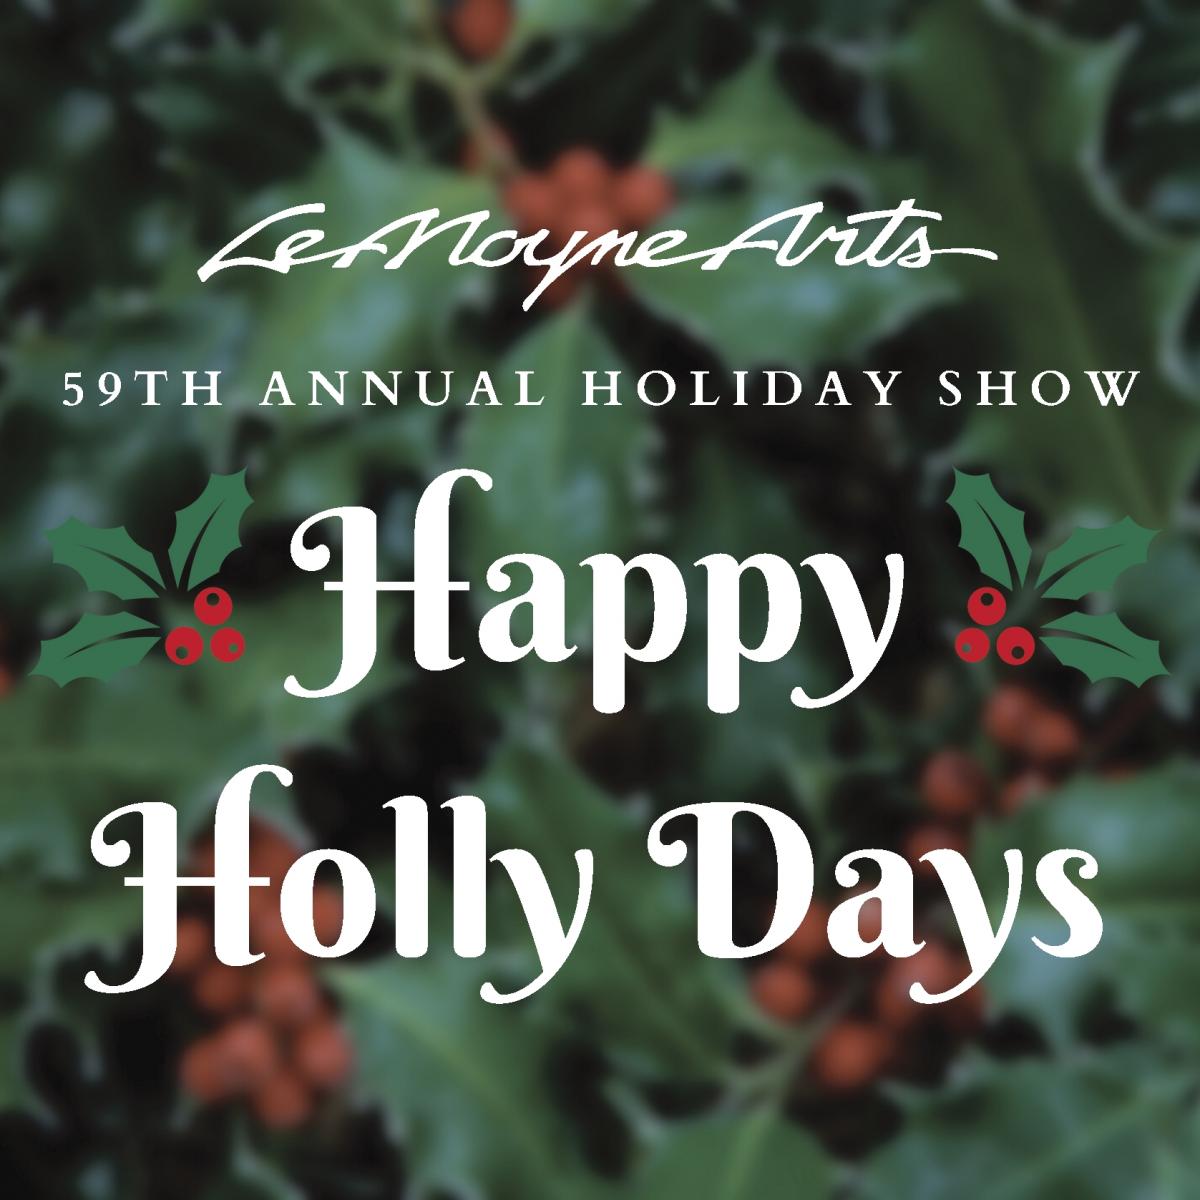 LeMoyne Arts 59th Annual Holiday Show: "Happy Holly Days"